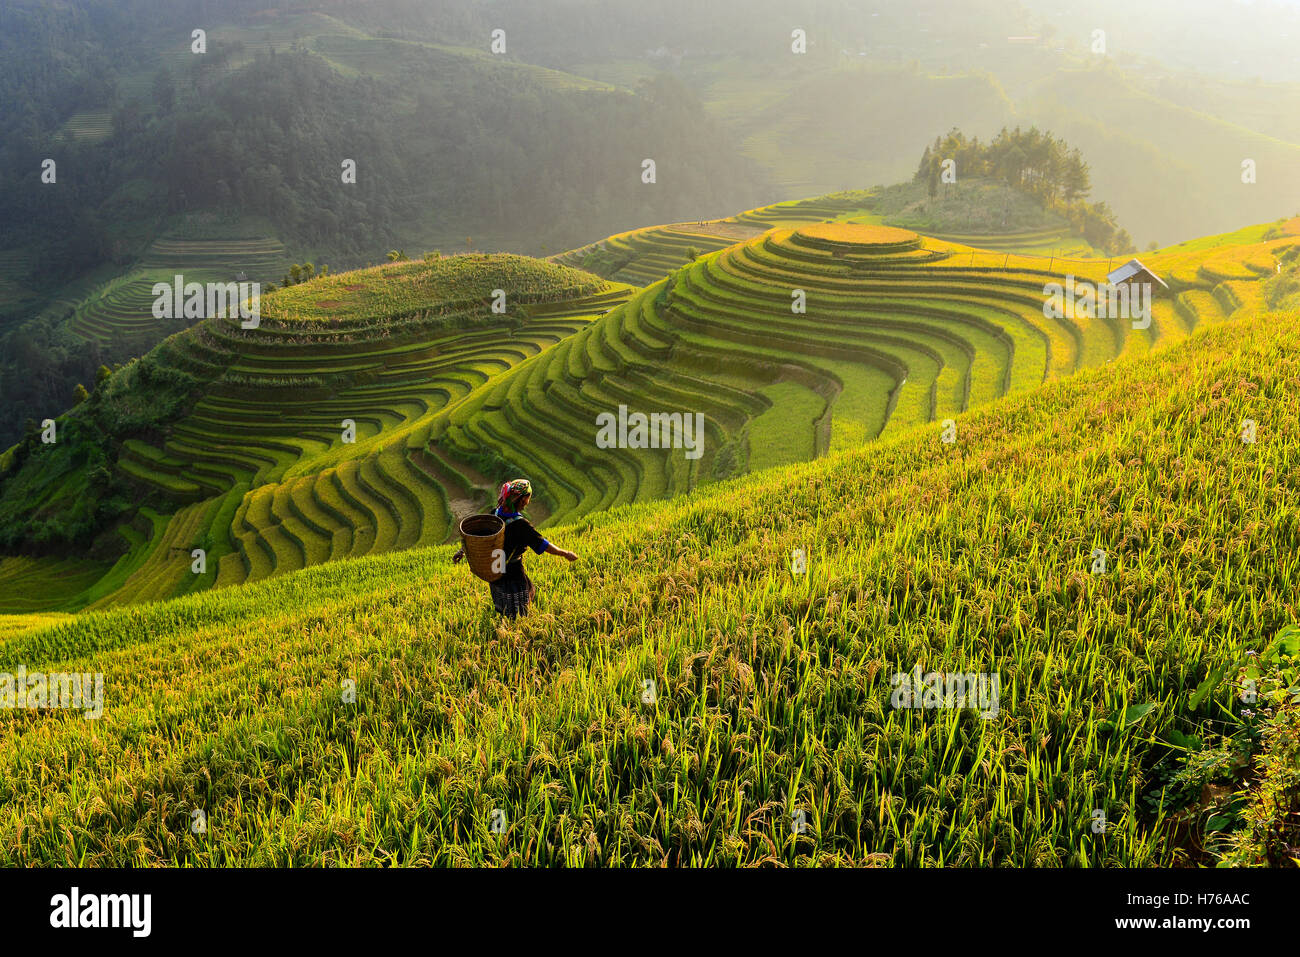 Frau arbeitet im terrassenförmig angelegten Reis Feld, Mu Cang Chai, vietnam Stockfoto